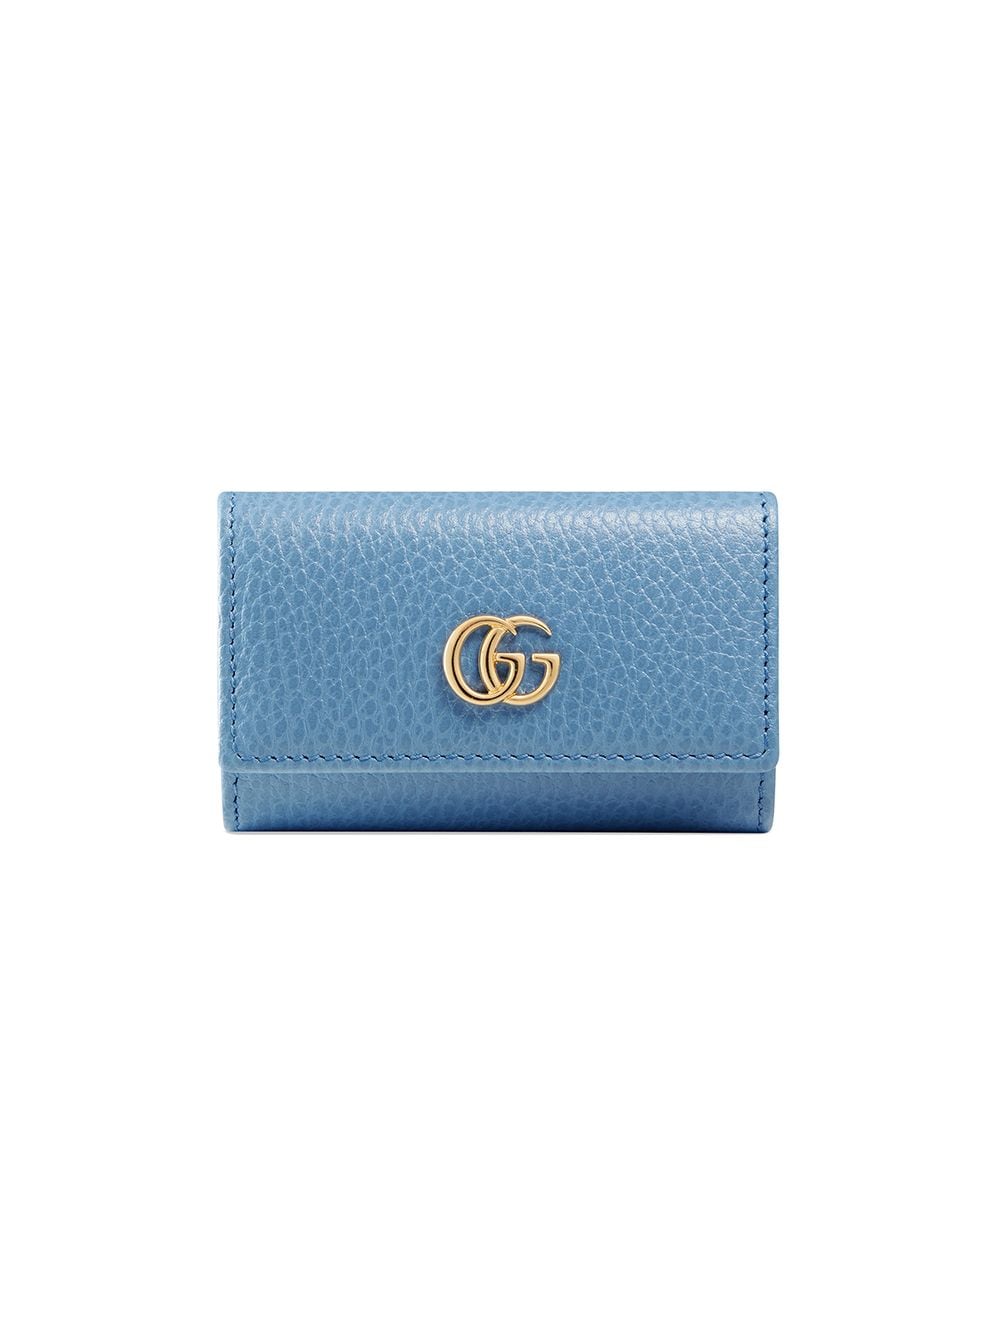 Gucci Blue Leather GG Marmont Bamboo Key Case QFA3WG1LBB000